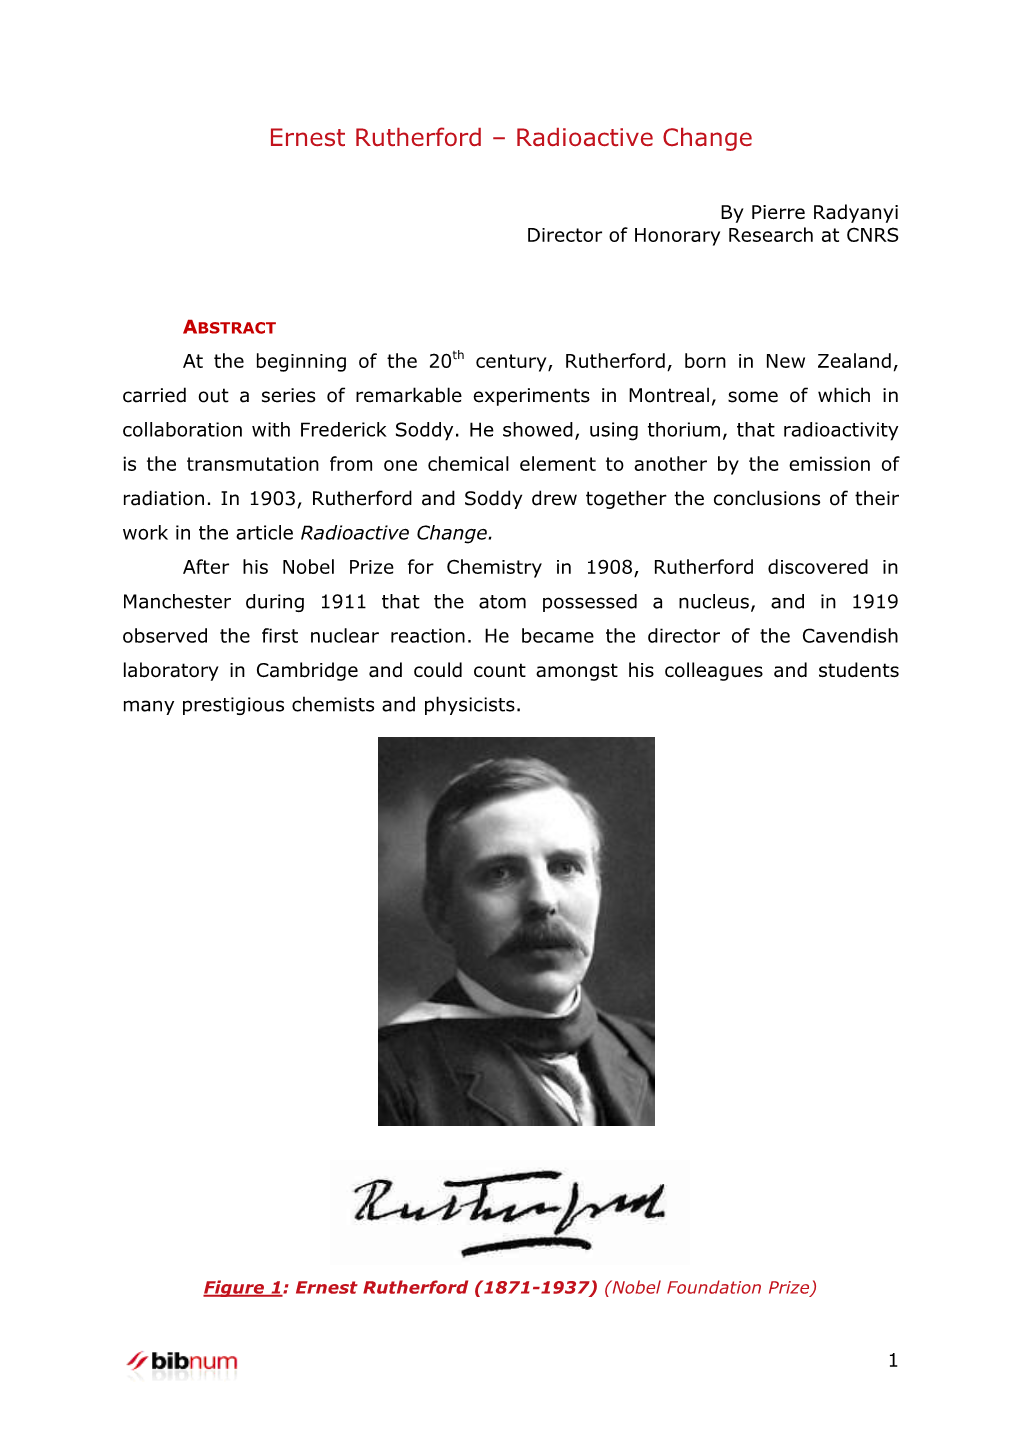 Ernest Rutherford : La Transformation Radioactive